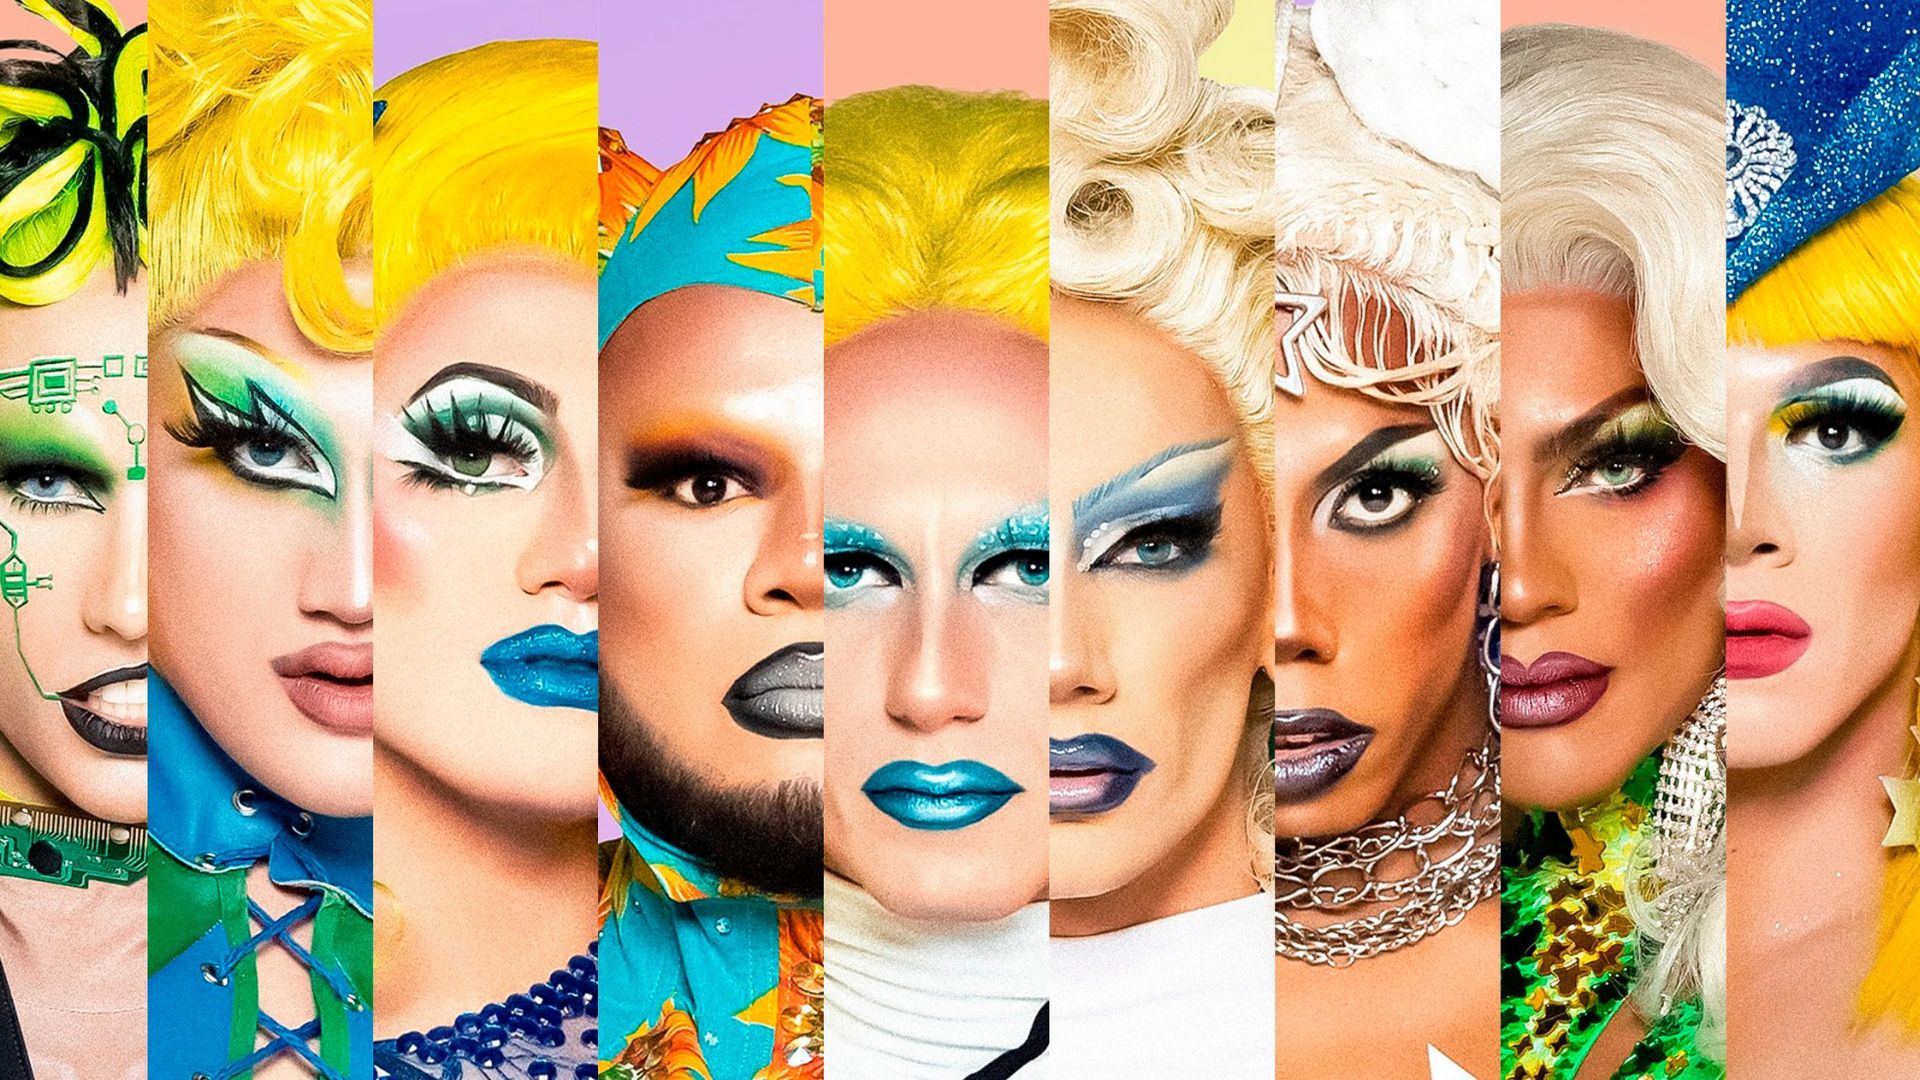 Moda e cultura drag - ELLE Brasil